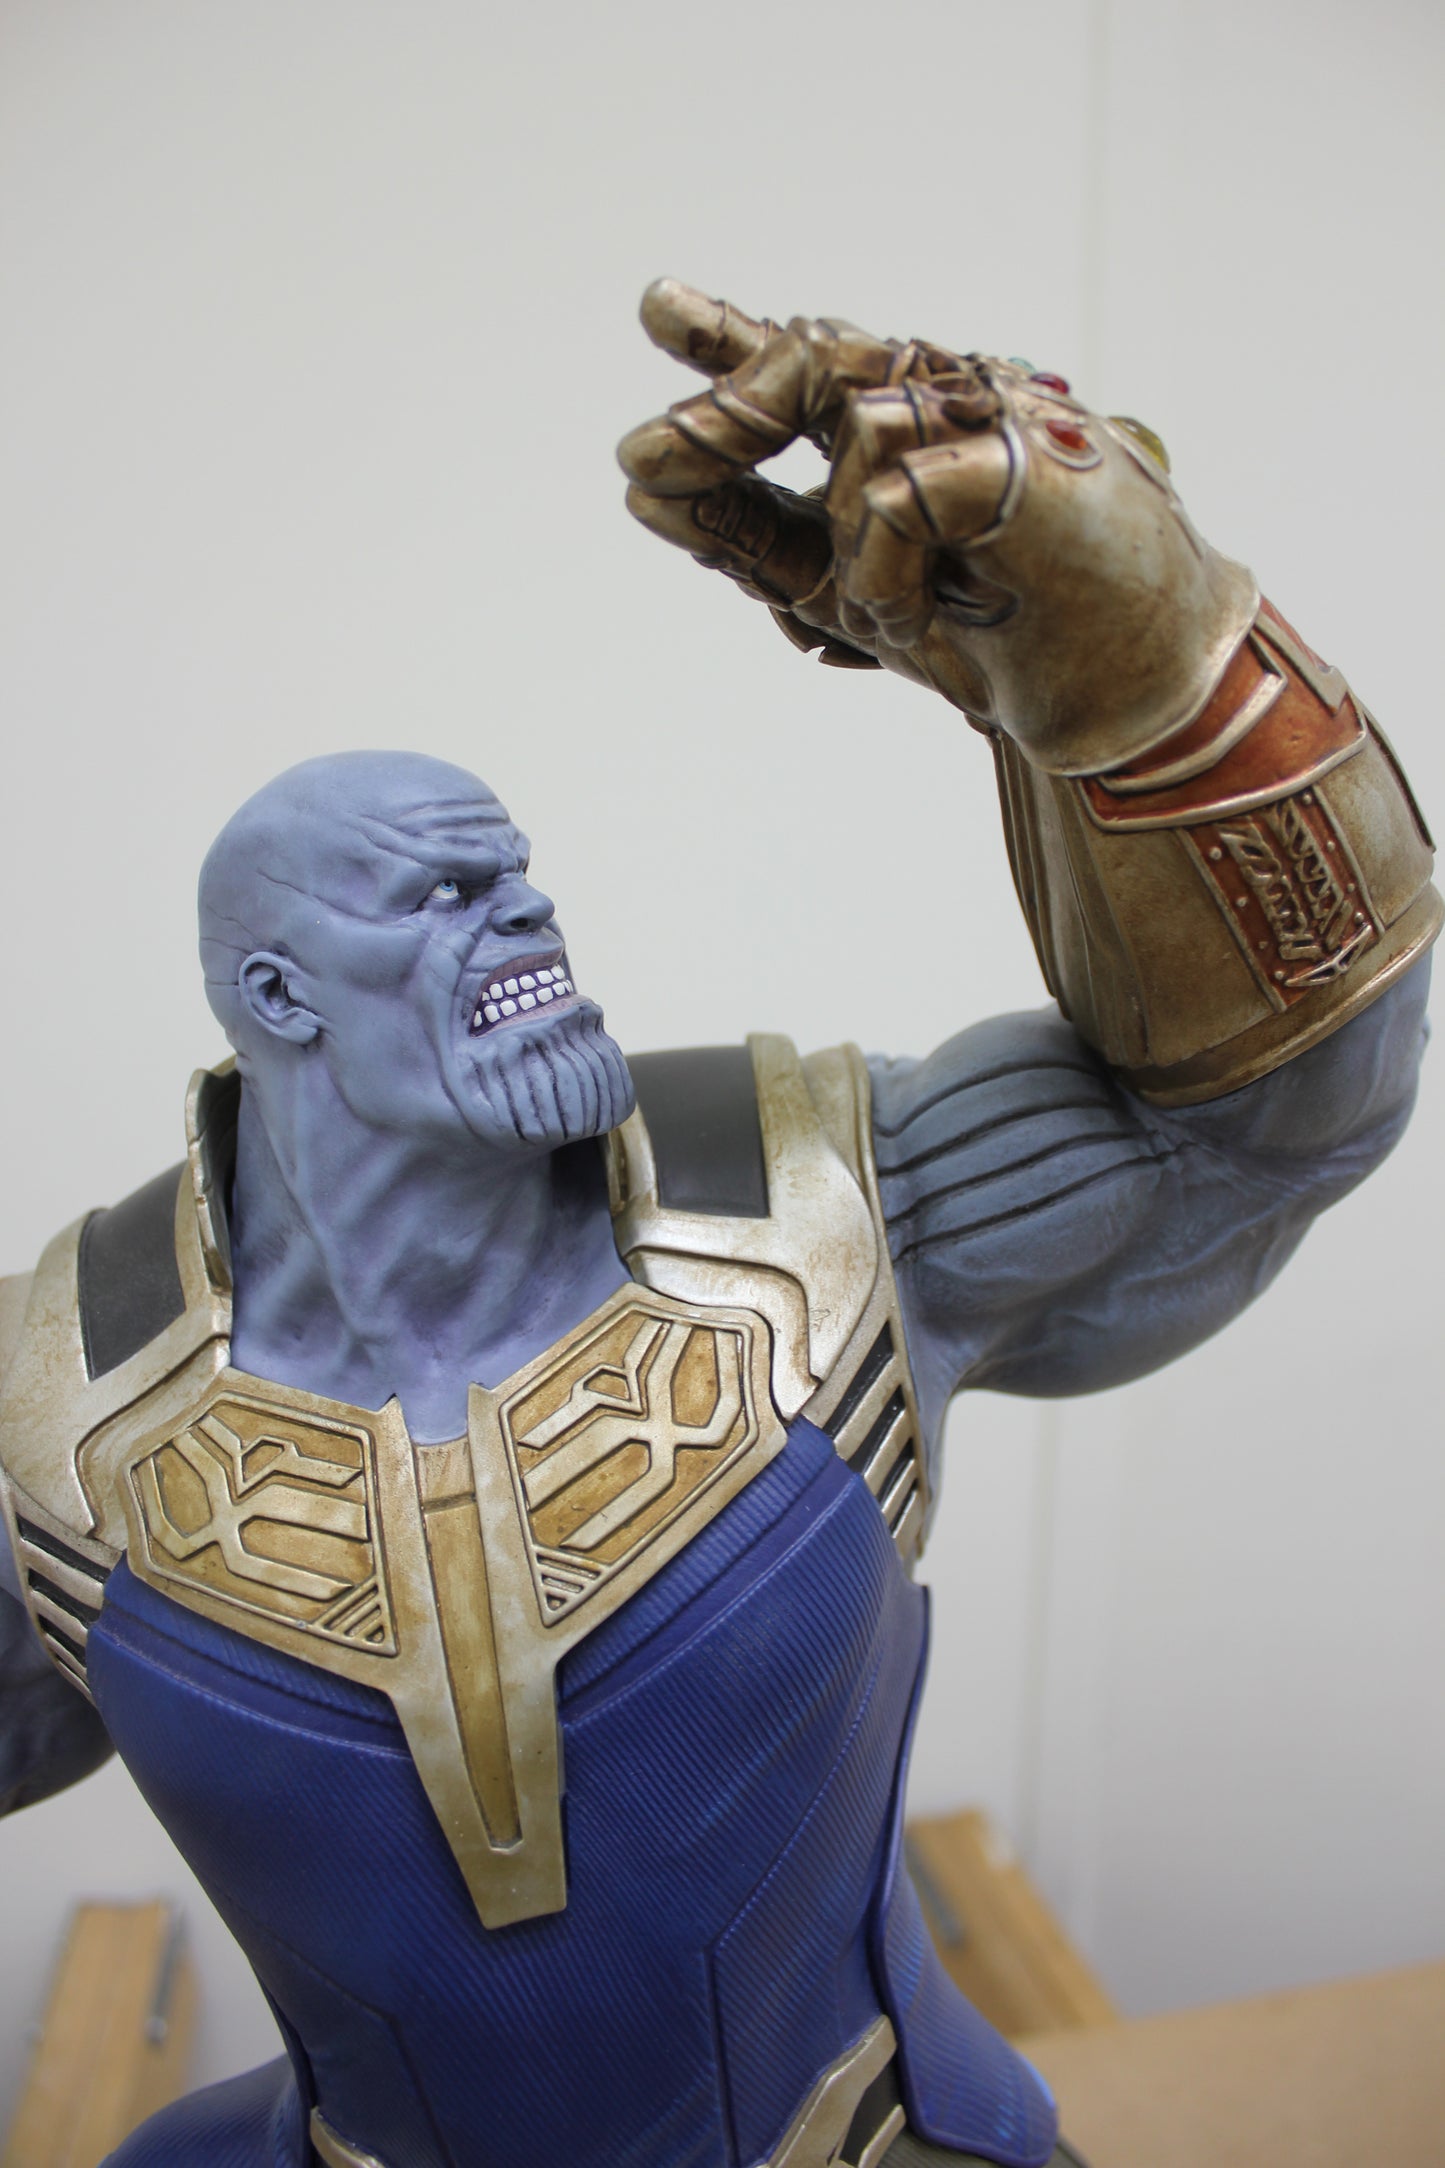 Marvel Milestones Avengers Infinity War Thanos Statue